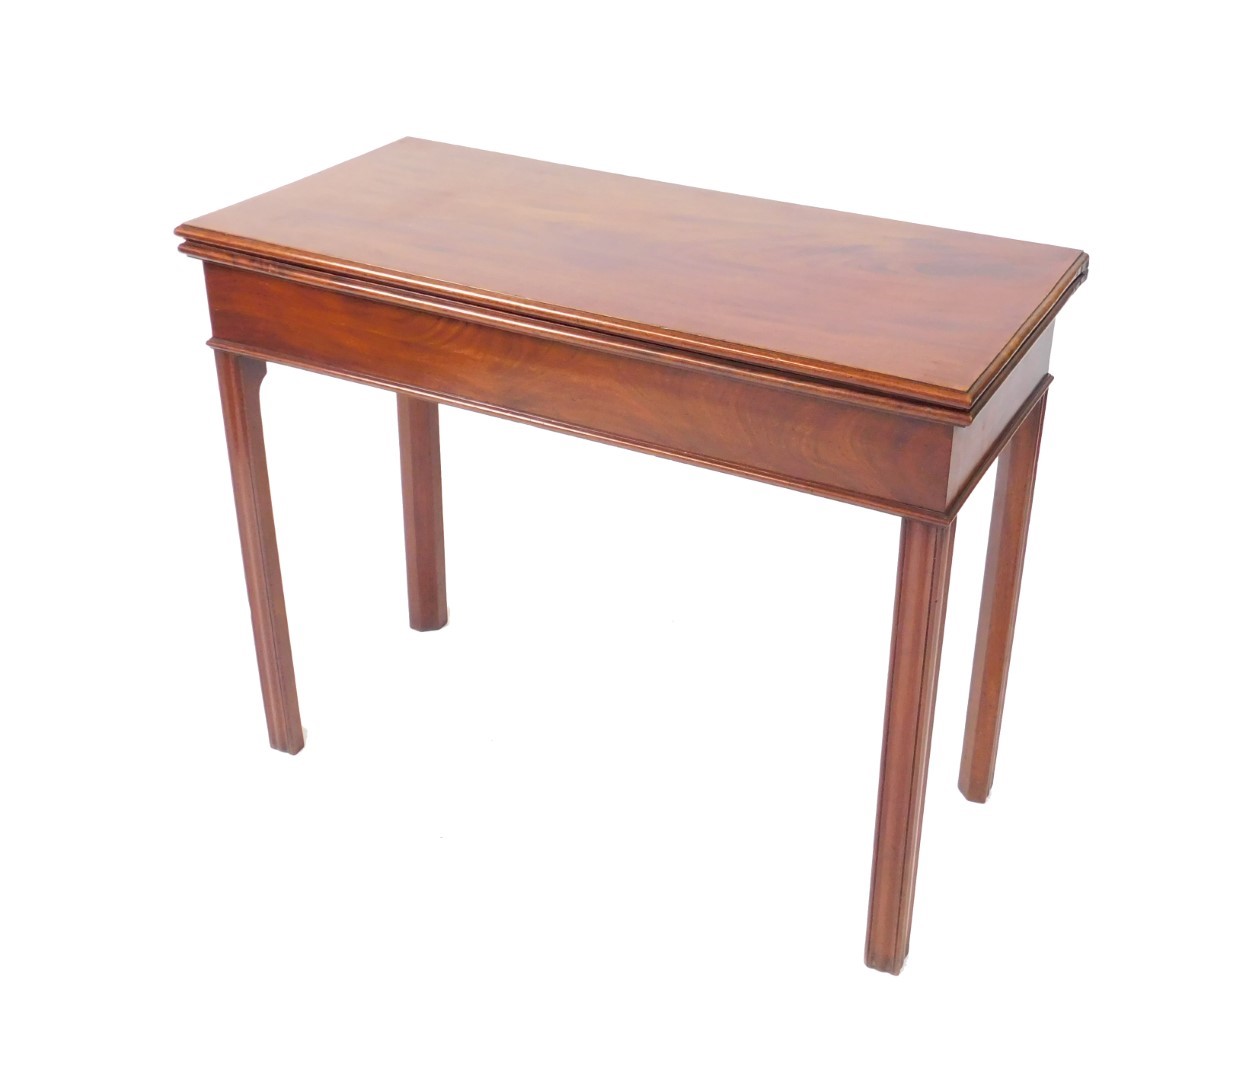 A George III mahogany fold over tea table, raised on fluted square legs, 73cm H, 92cm W, 42.5cm D.